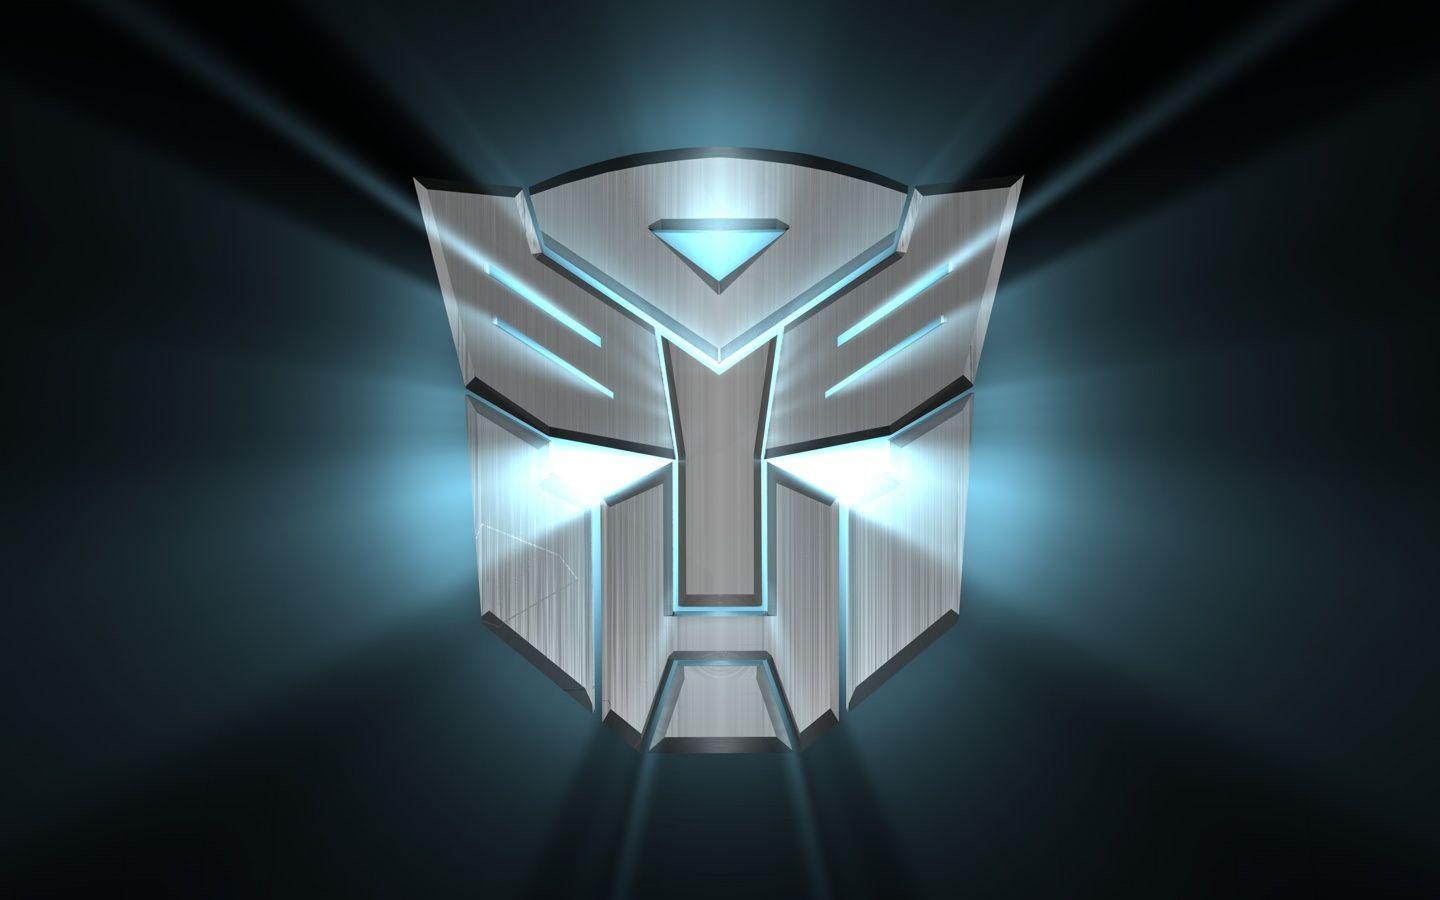 Cool Autobot Logo - Autobot logo Wallpaper and Background Imagex900